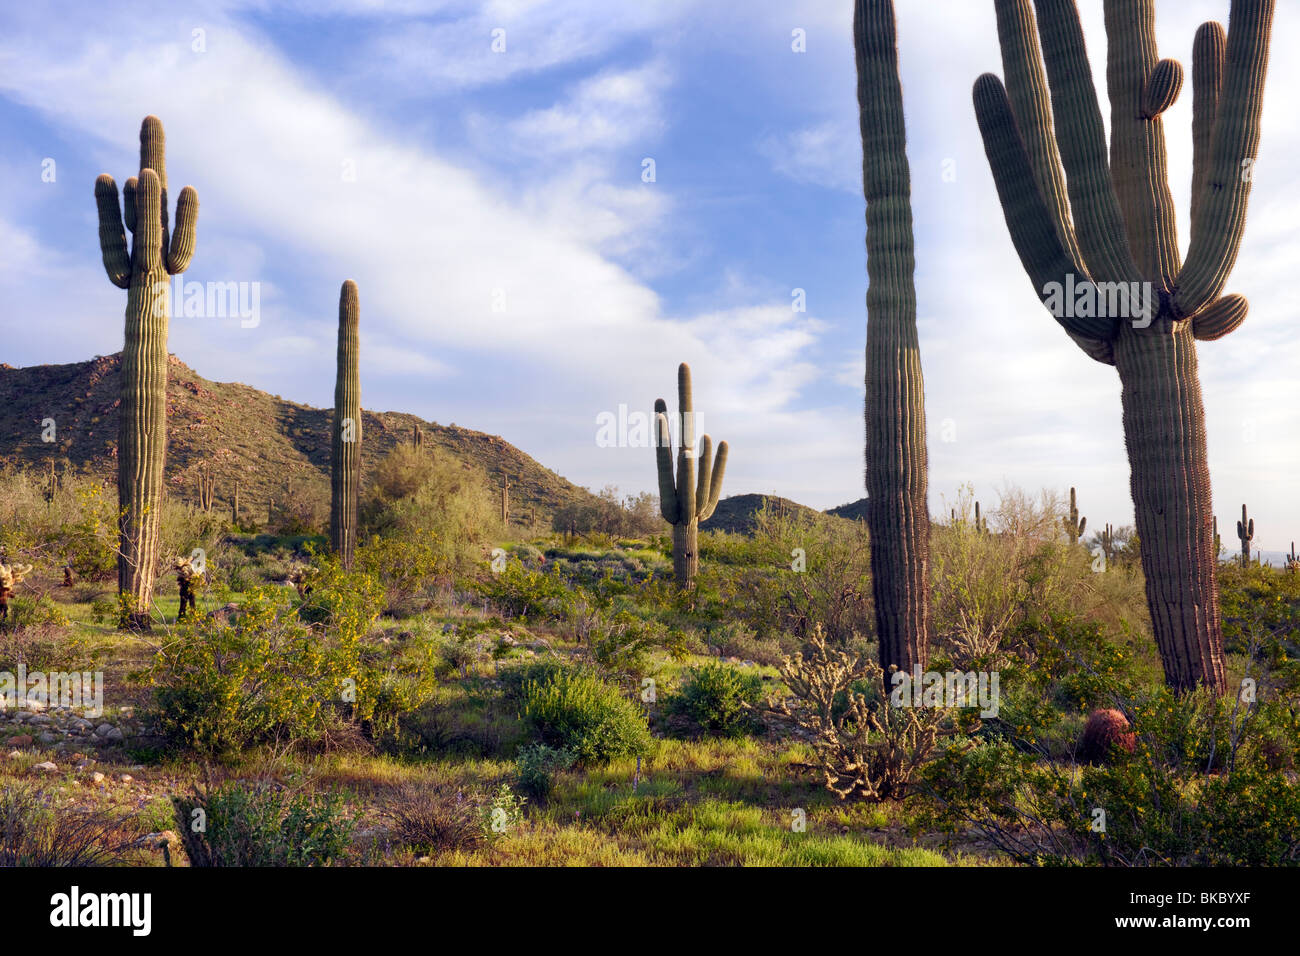 Towering Saguaro cactus in the Sonoran Desert and Arizona's White Tank Mountains Regional Park. Stock Photo